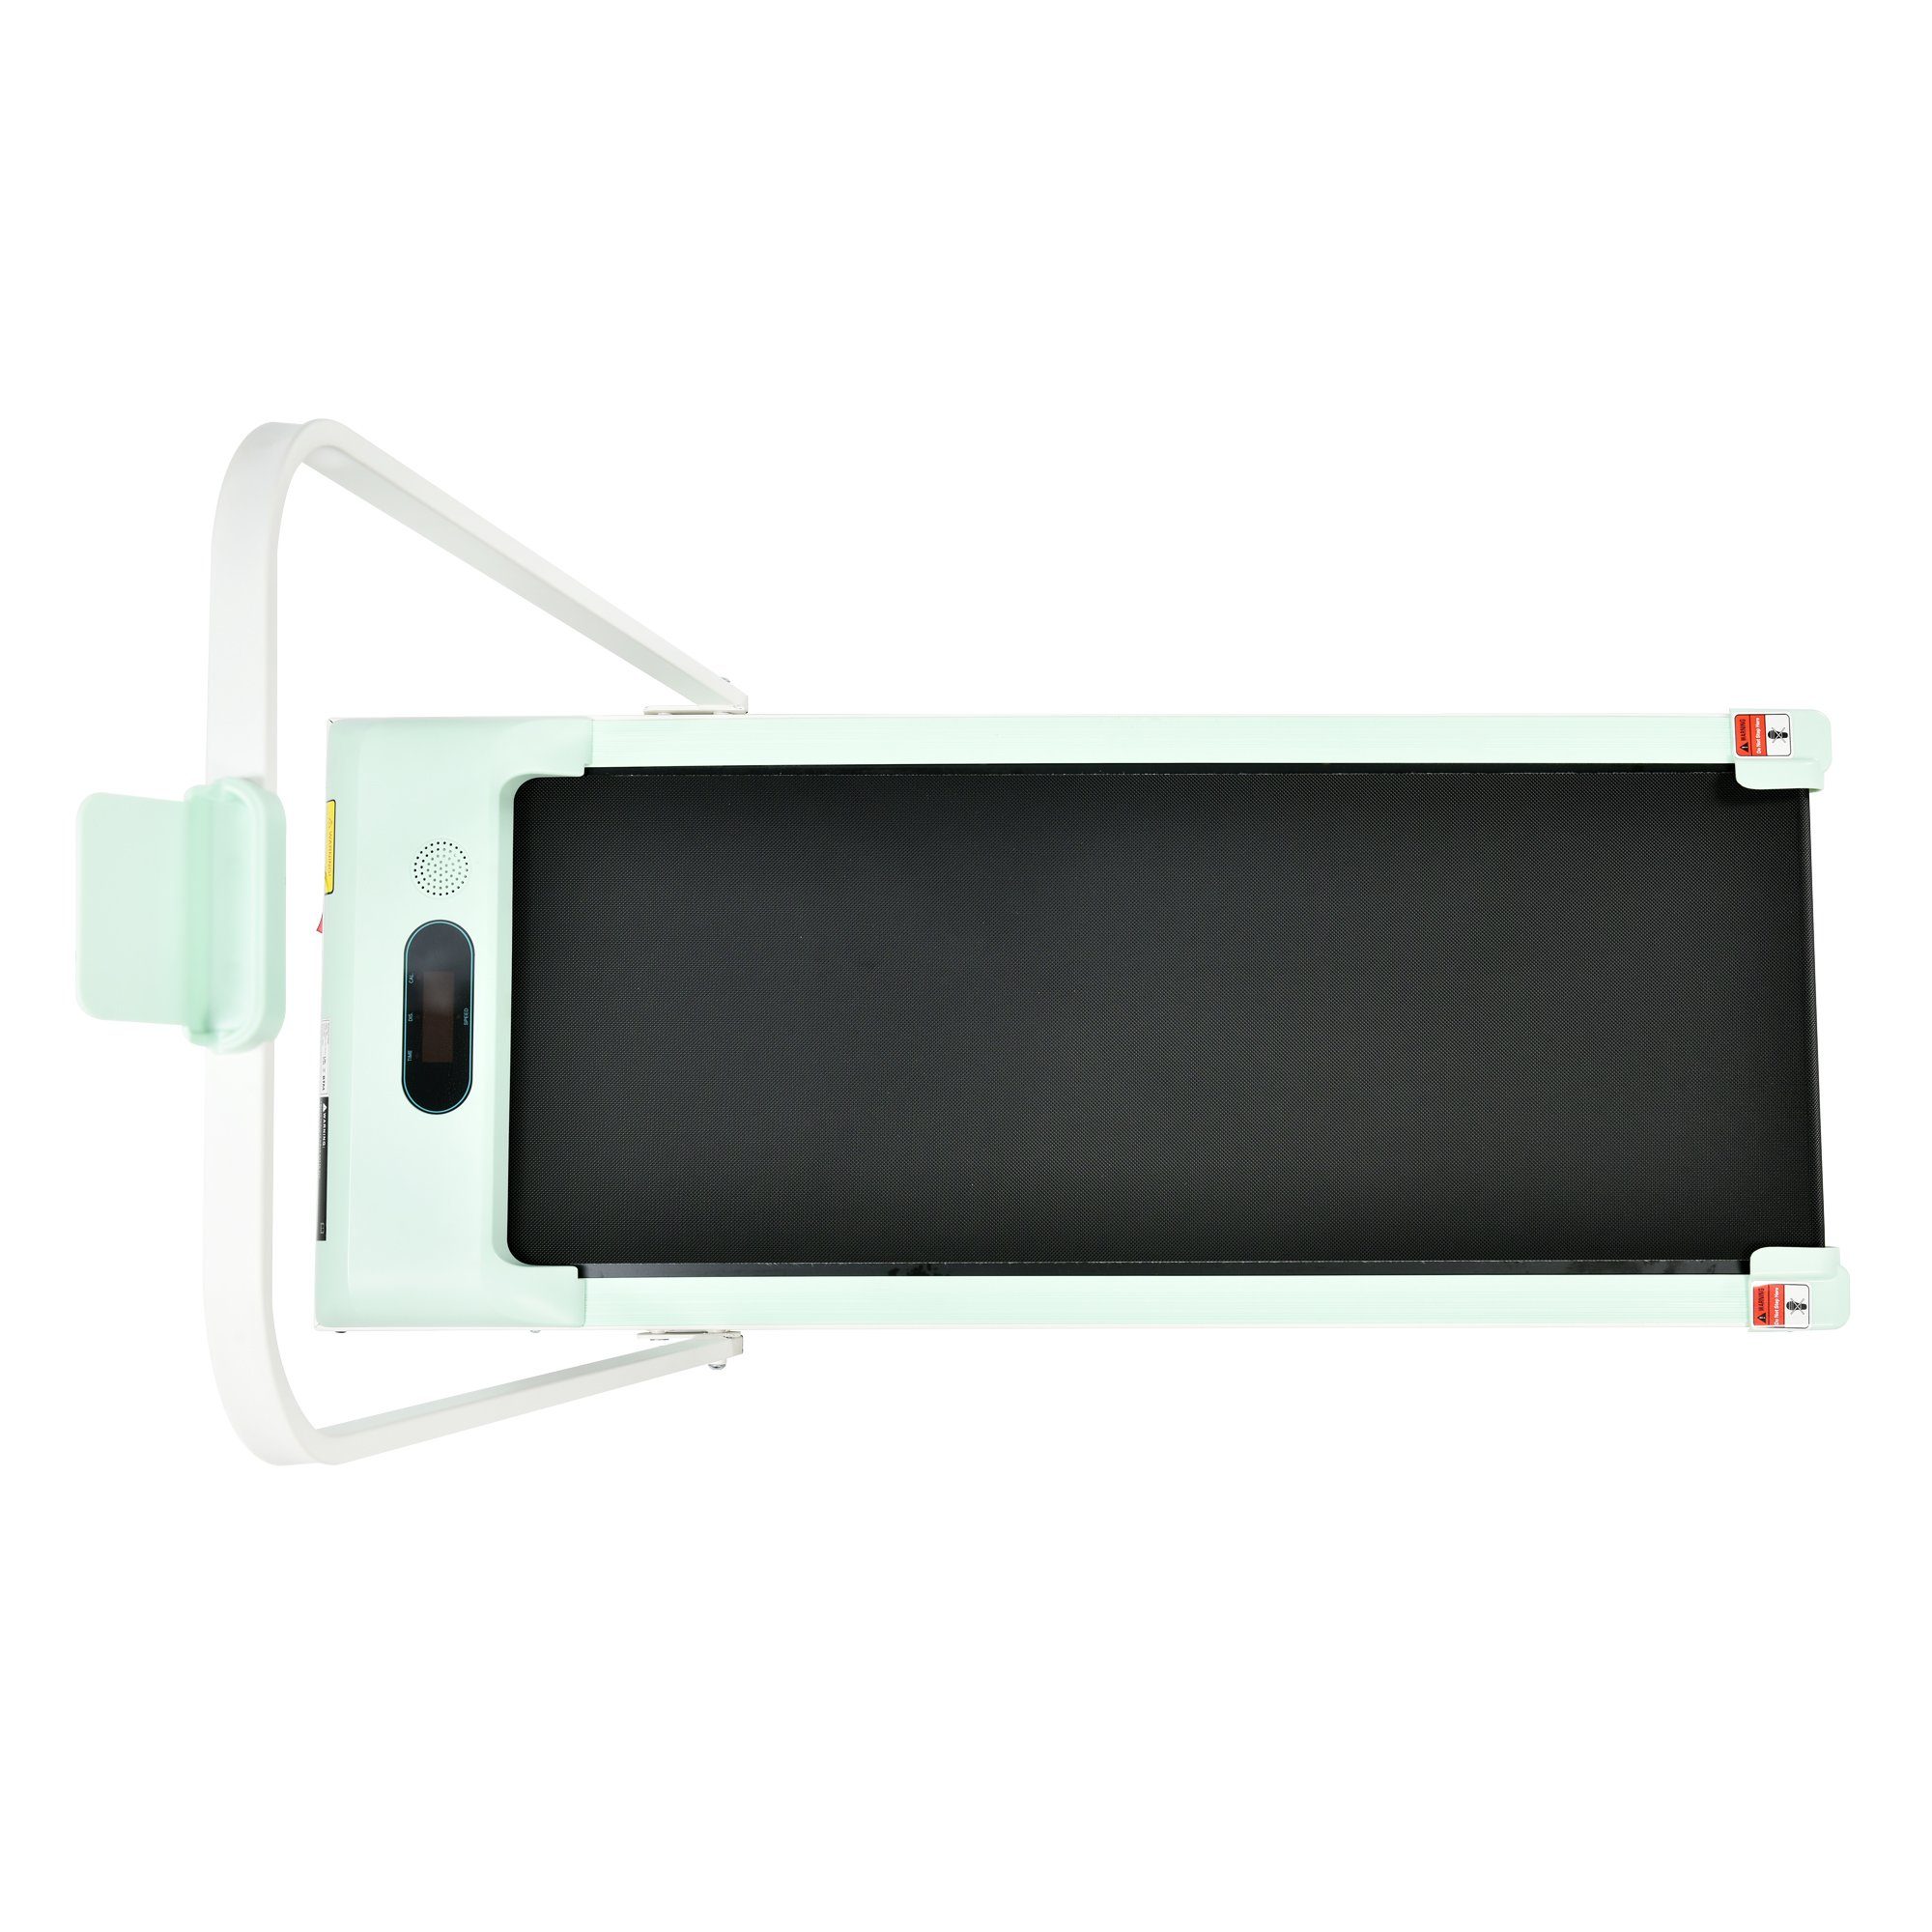 Ulife Laufband Klappbar mit Grün km/h Fernbedienung, Bluetooth,1-6 LED-Display